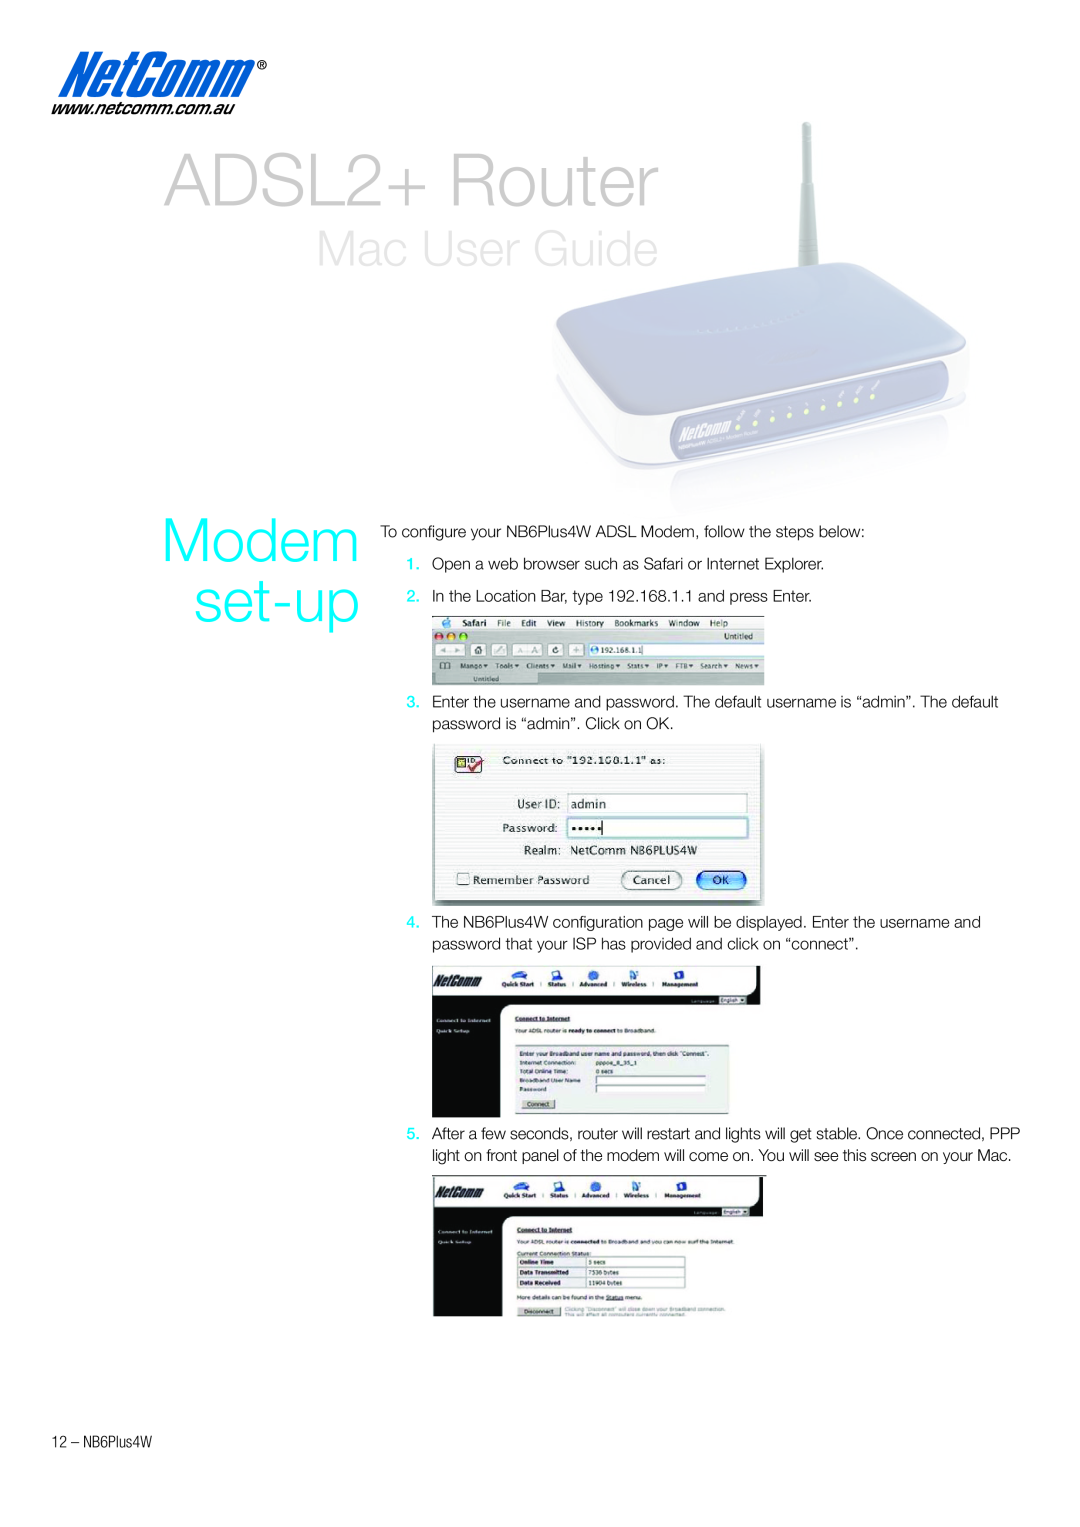 NetComm NB6PLUS4W quick start Modem set-up, ADSL2+ Router, Mac User Guide 